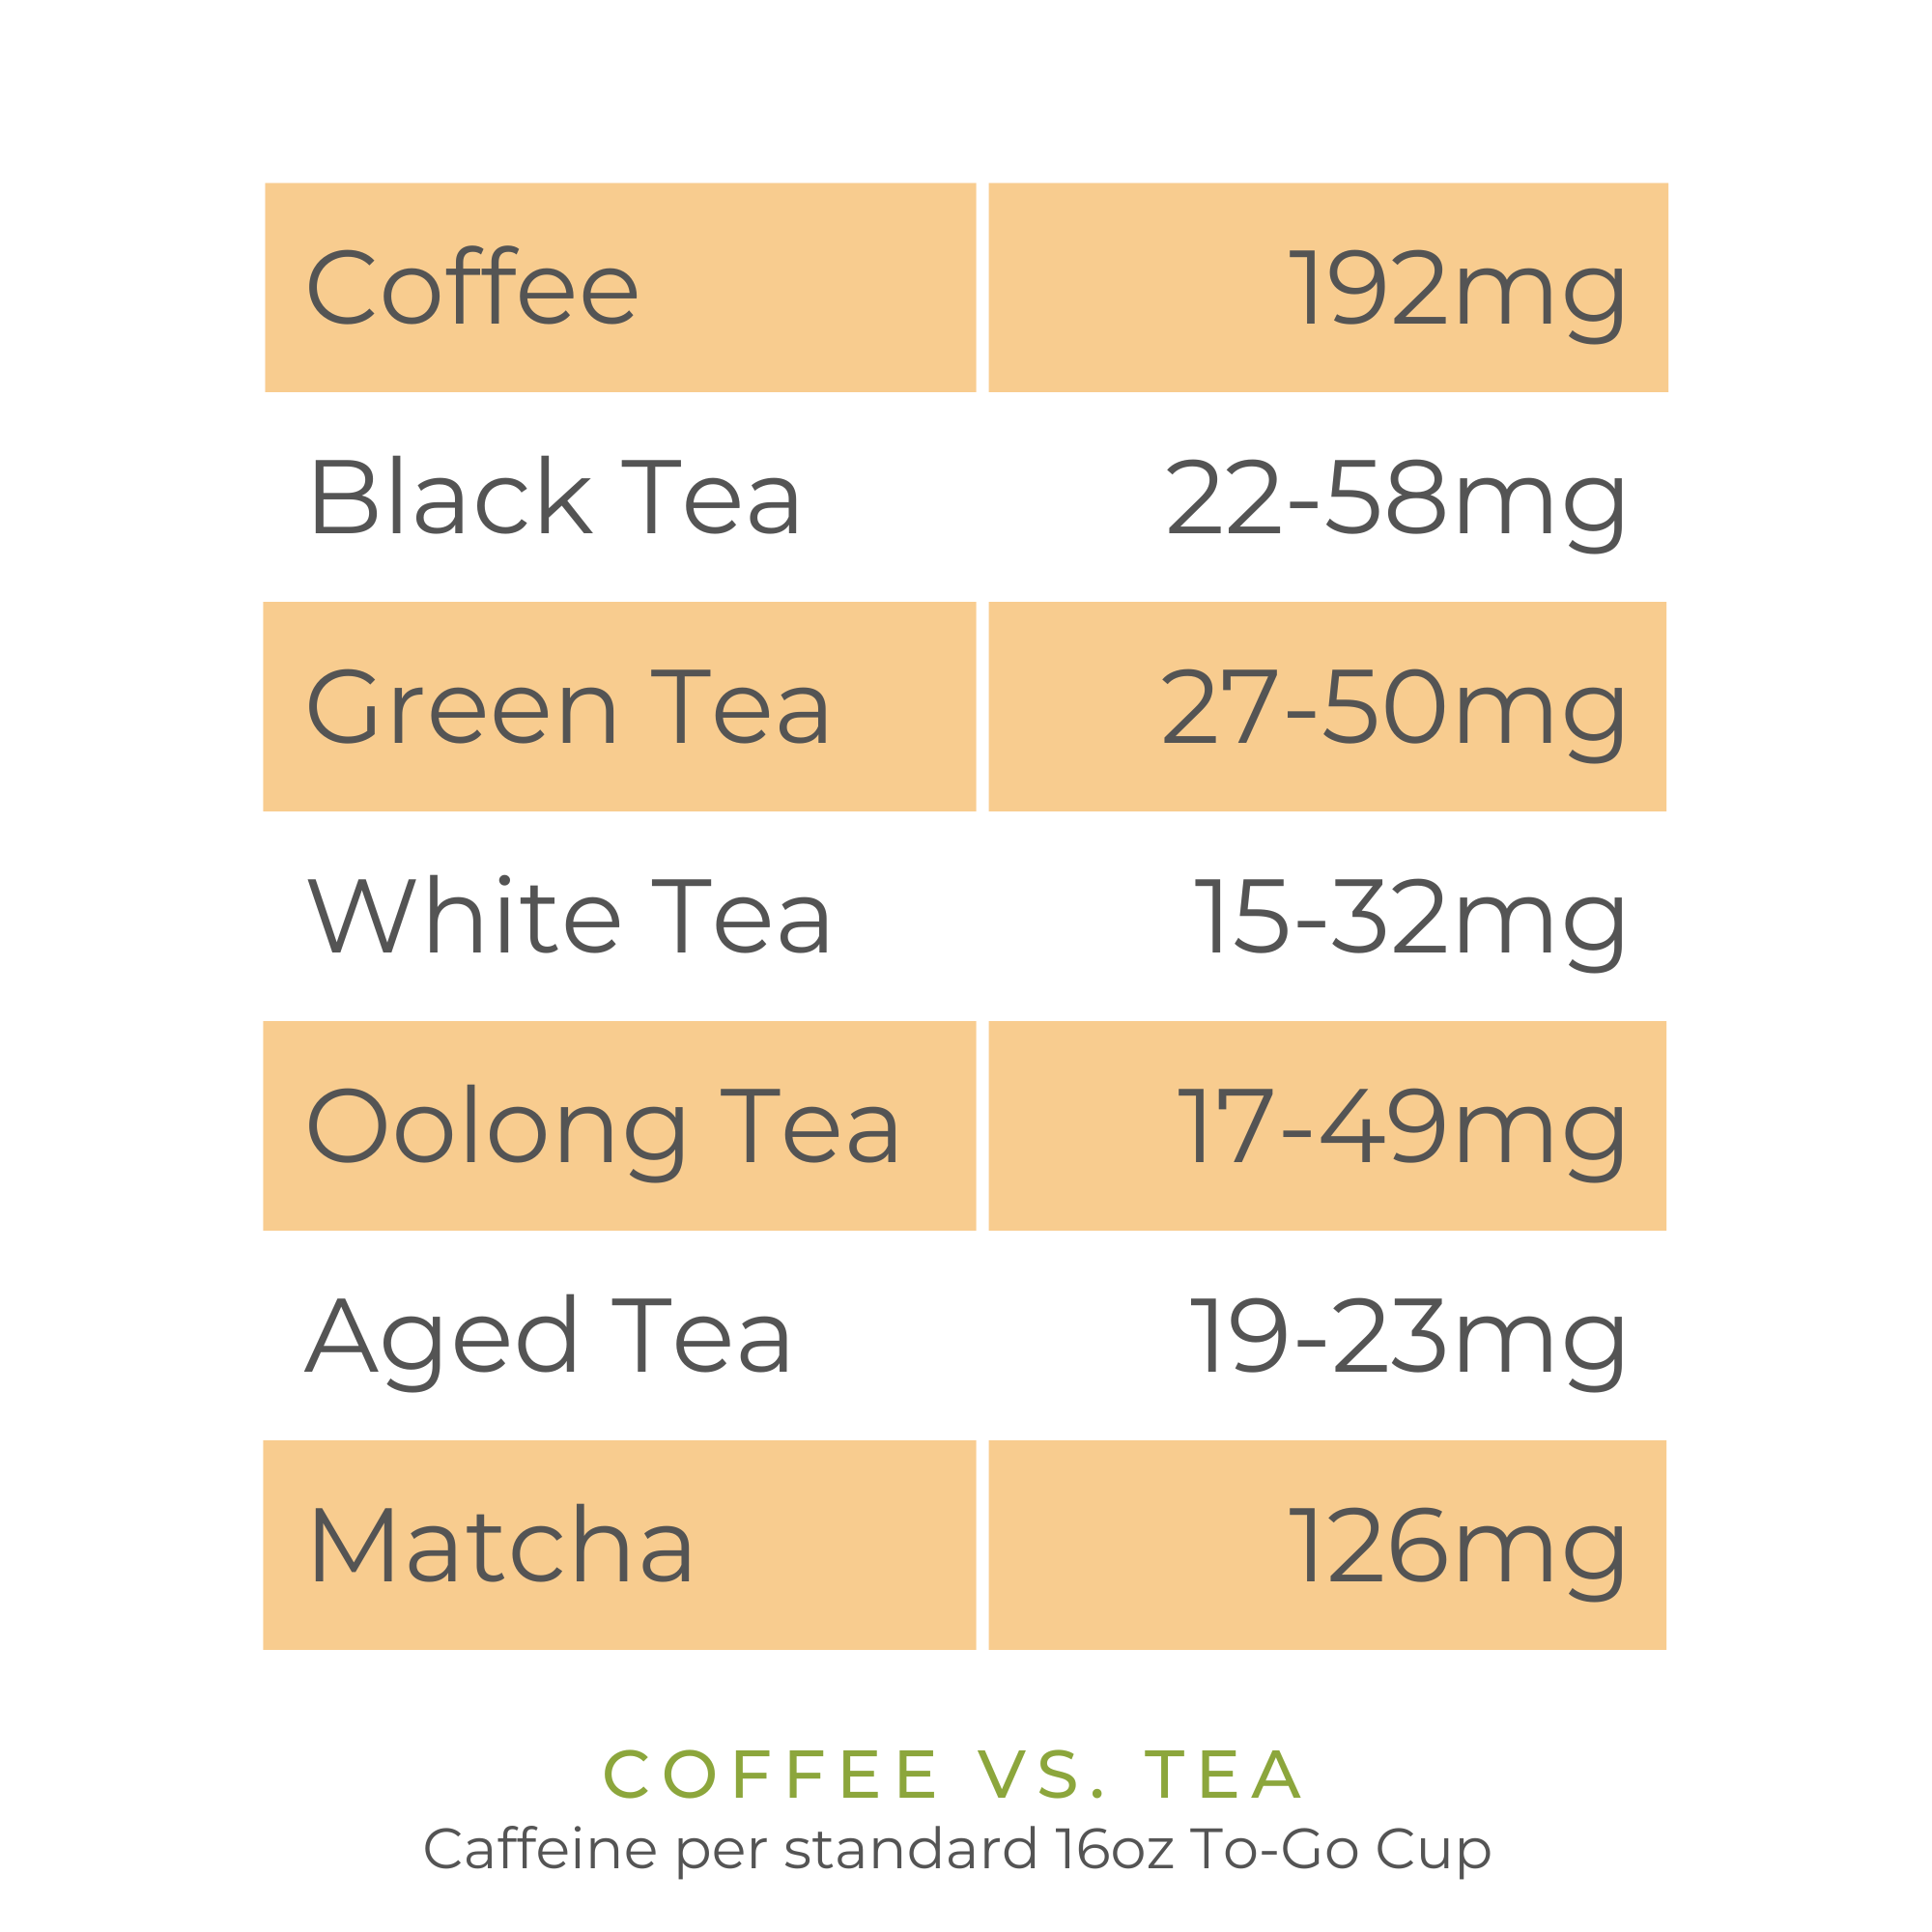 caffeine content in coffee versus tea. Caffeine in coffee equals 192 mg. Caffeine in Black tea equals 22-58 mg. Caffeine in Green Tea equals 27-50 mg. Caffeine in White Tea equals 15-32 mg. Caffeine in Oolong Tea equals 17-49 mg. Caffeine in Aged Tea equals 19-23 mg. Caffeine in matcha equals 126 mg. 